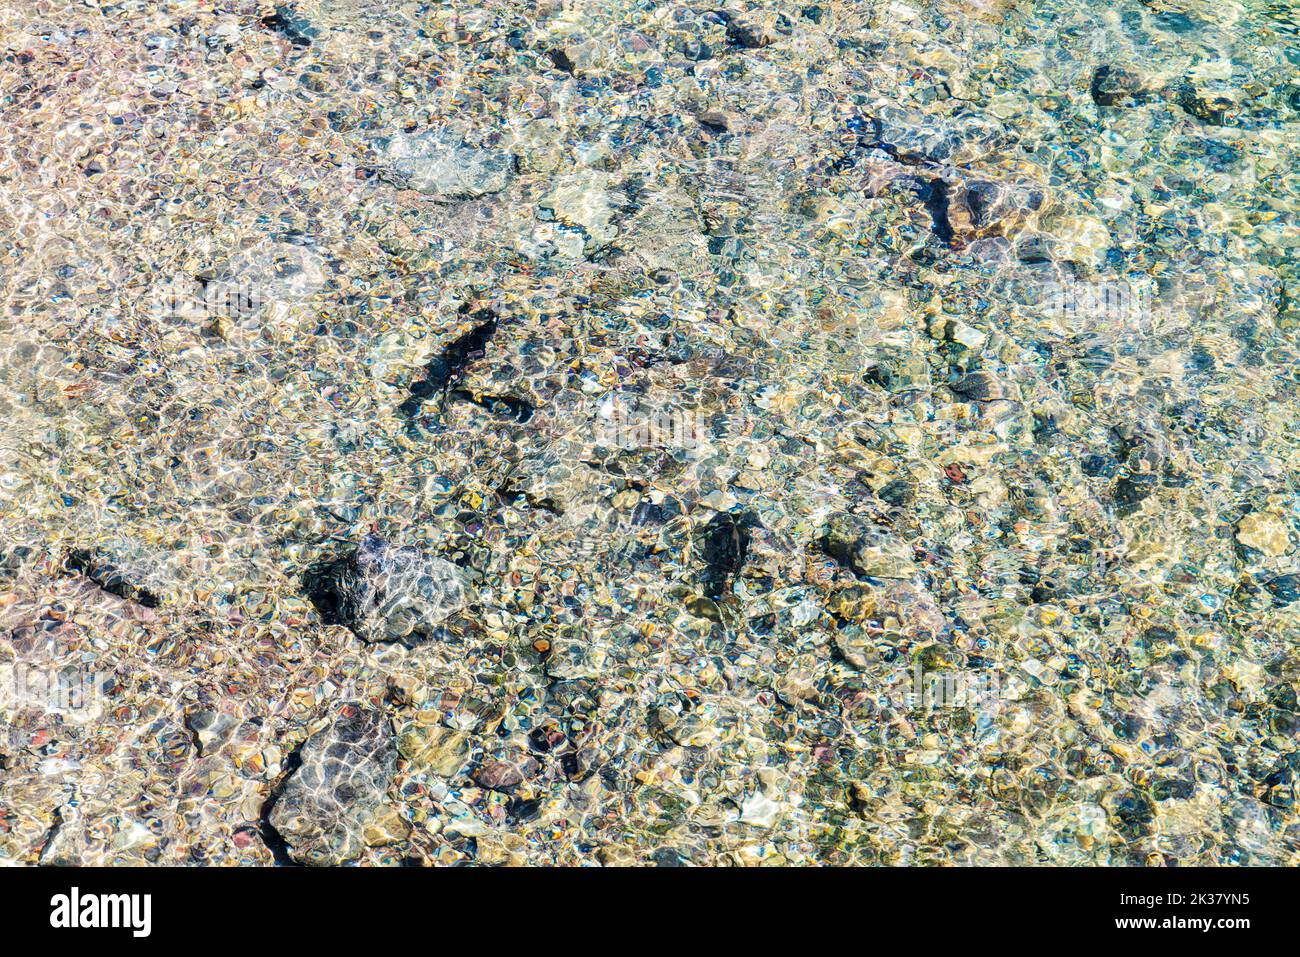 Trout swimming; Maligne Lake Outlet; Jasper National Park; Alberta; Canada Stock Photo